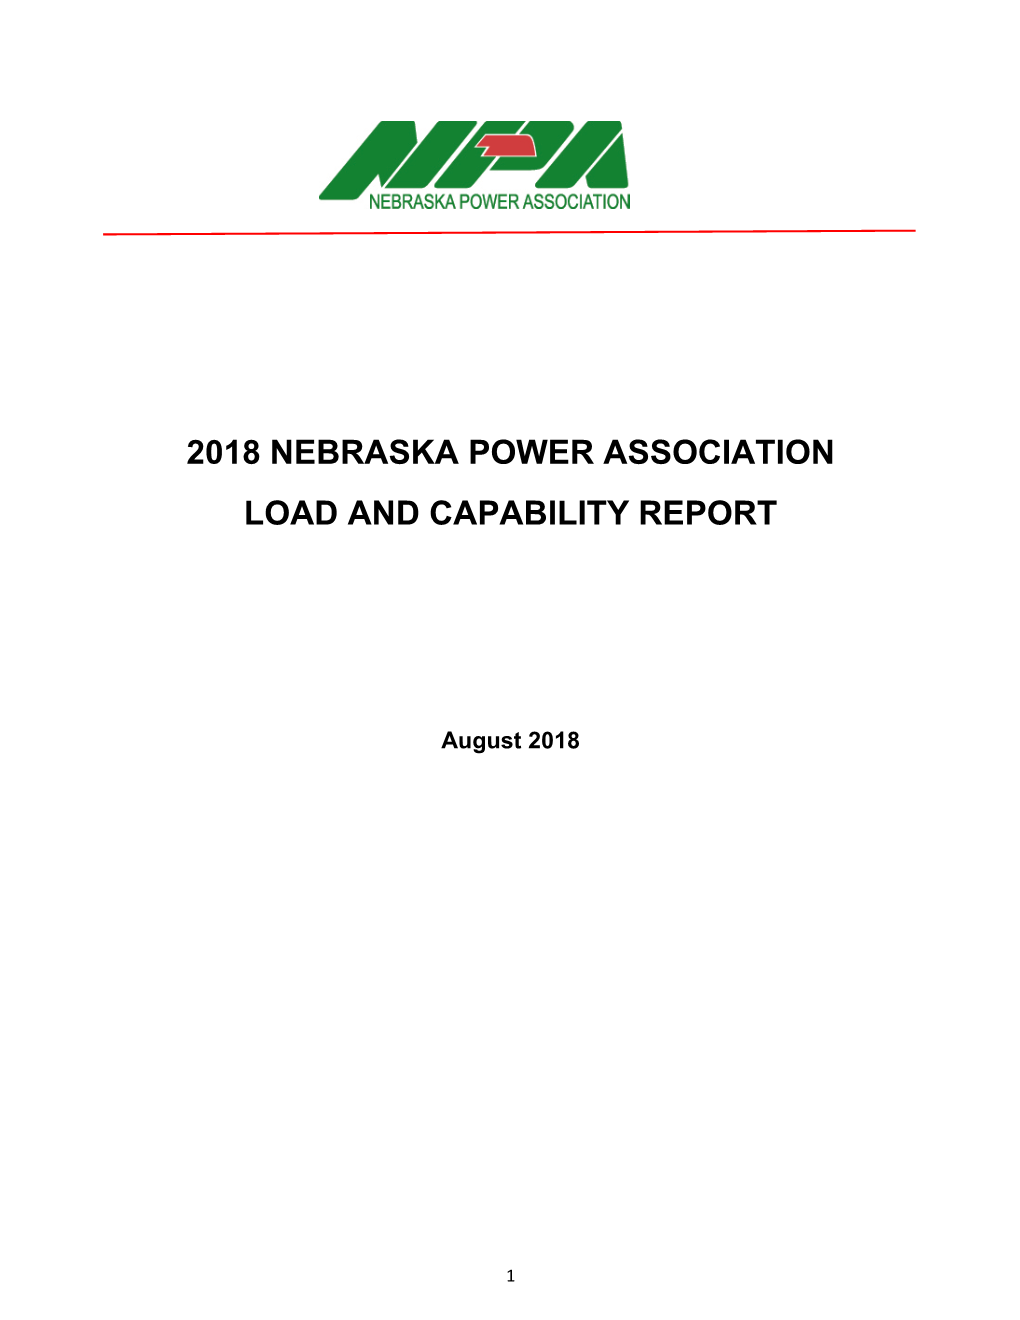 2018 Nebraska Power Association Load and Capability Report